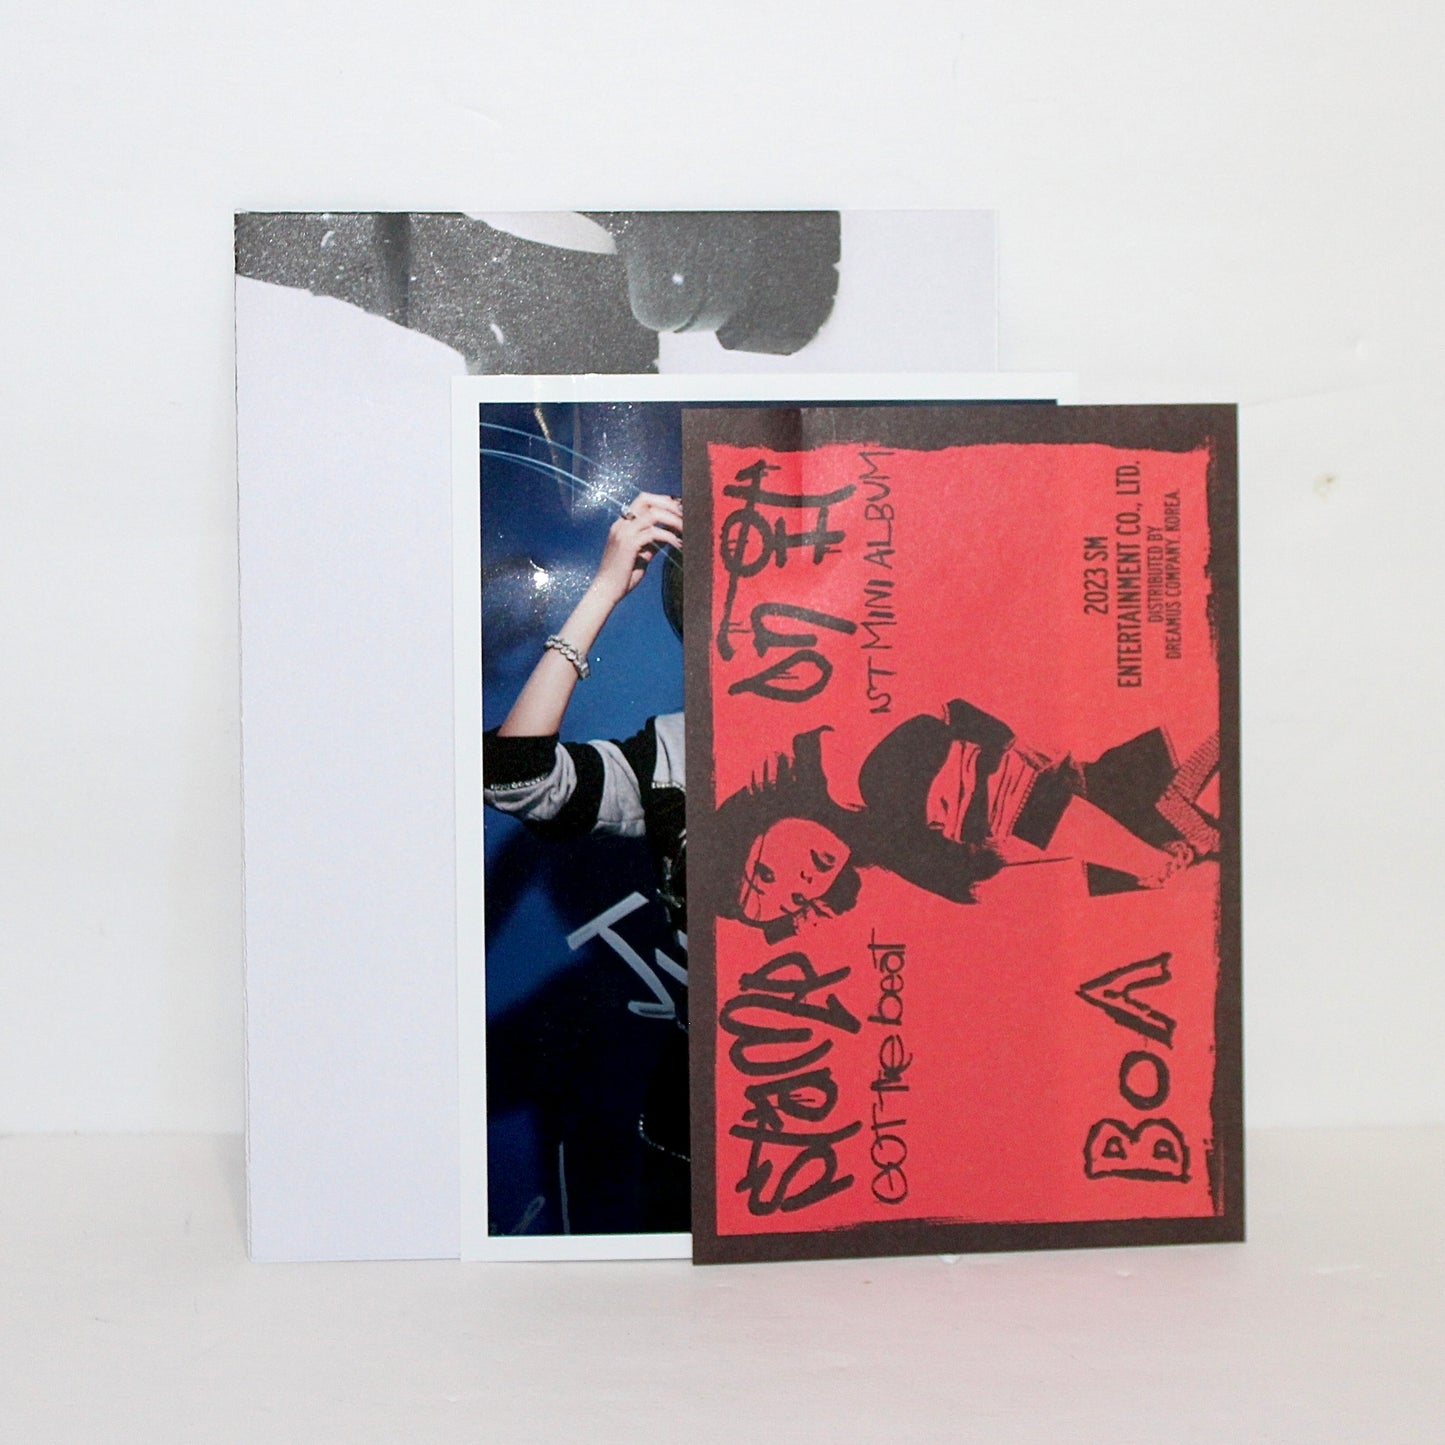 GOT THE BEAT 1st Mini Album: Stamp On It | Stamp Ver.